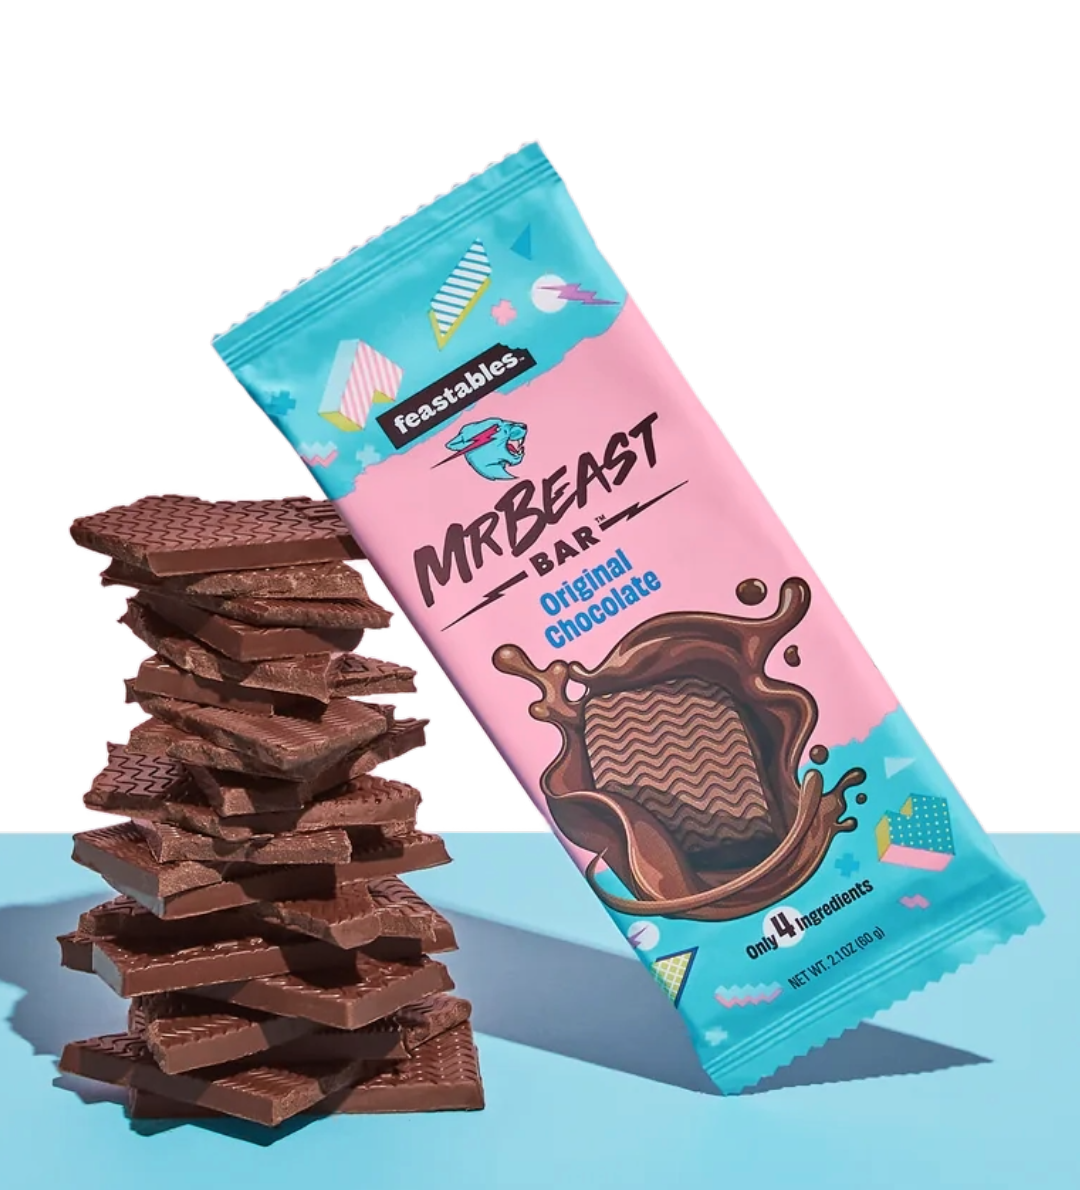 Mr. Beast Chocolate Bar - Original Chocolate